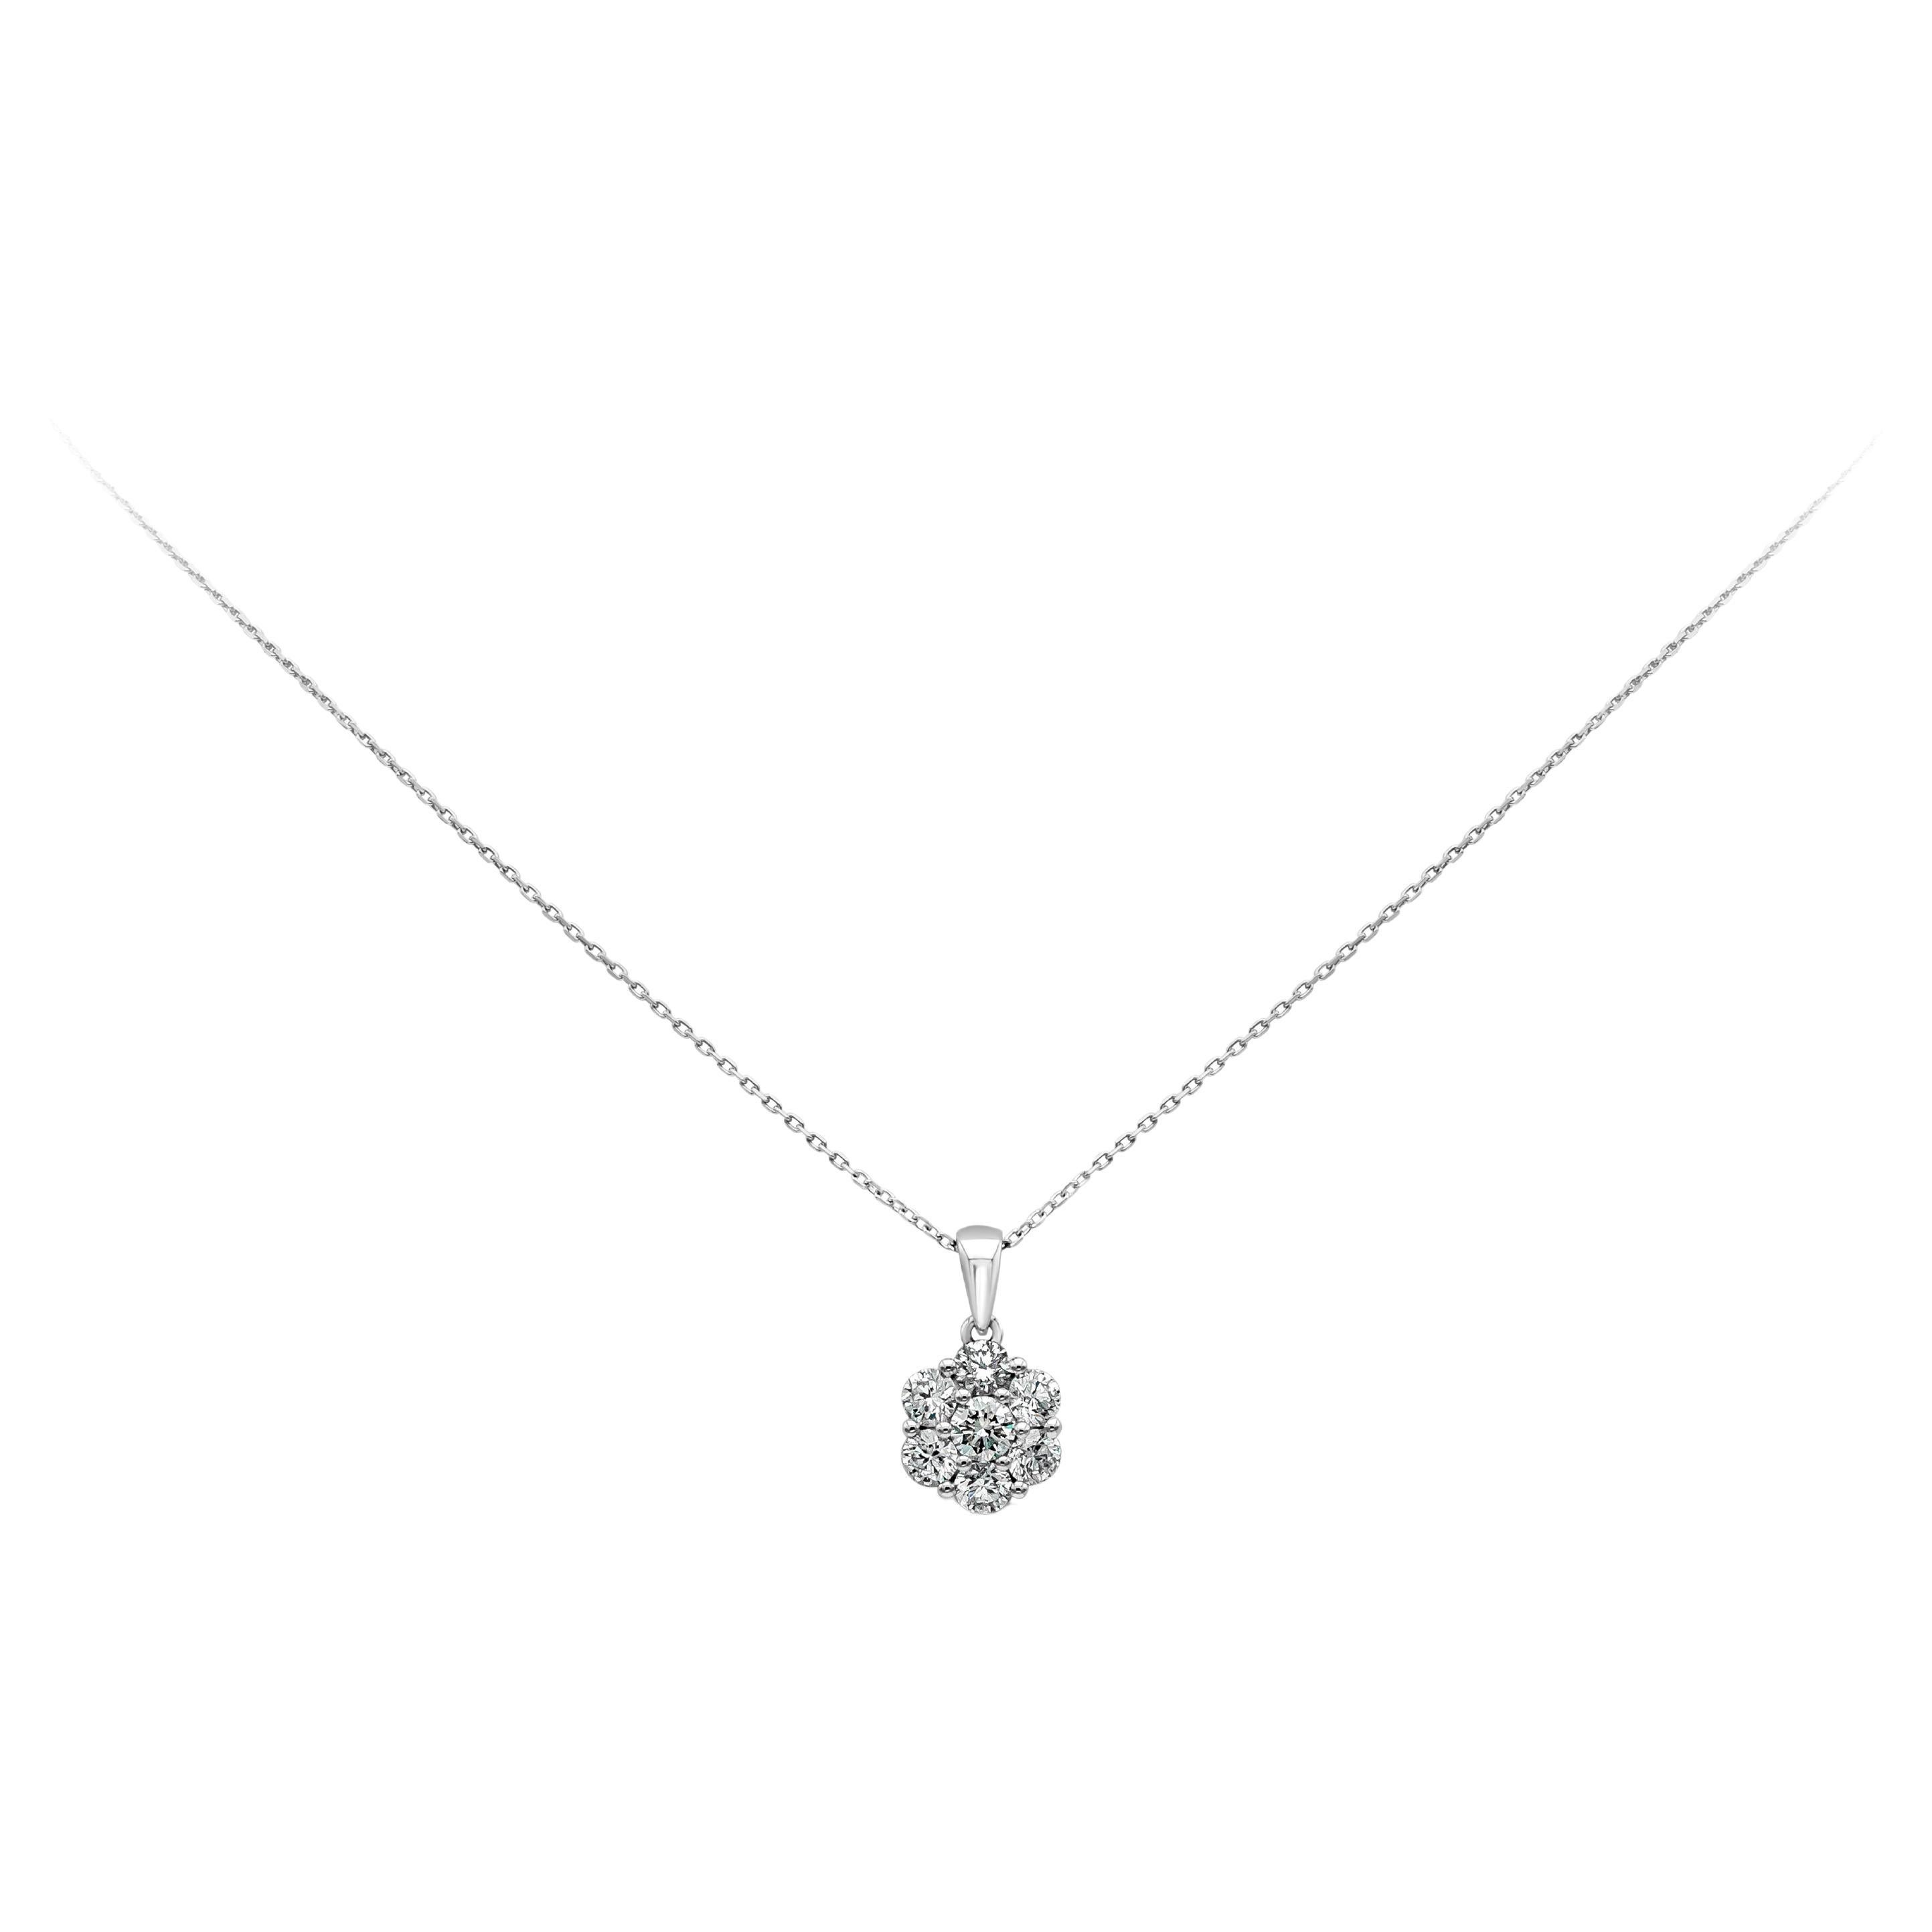 Roman Malakov, collier pendentif fleur en diamants ronds brillants de 1 carat au total en vente